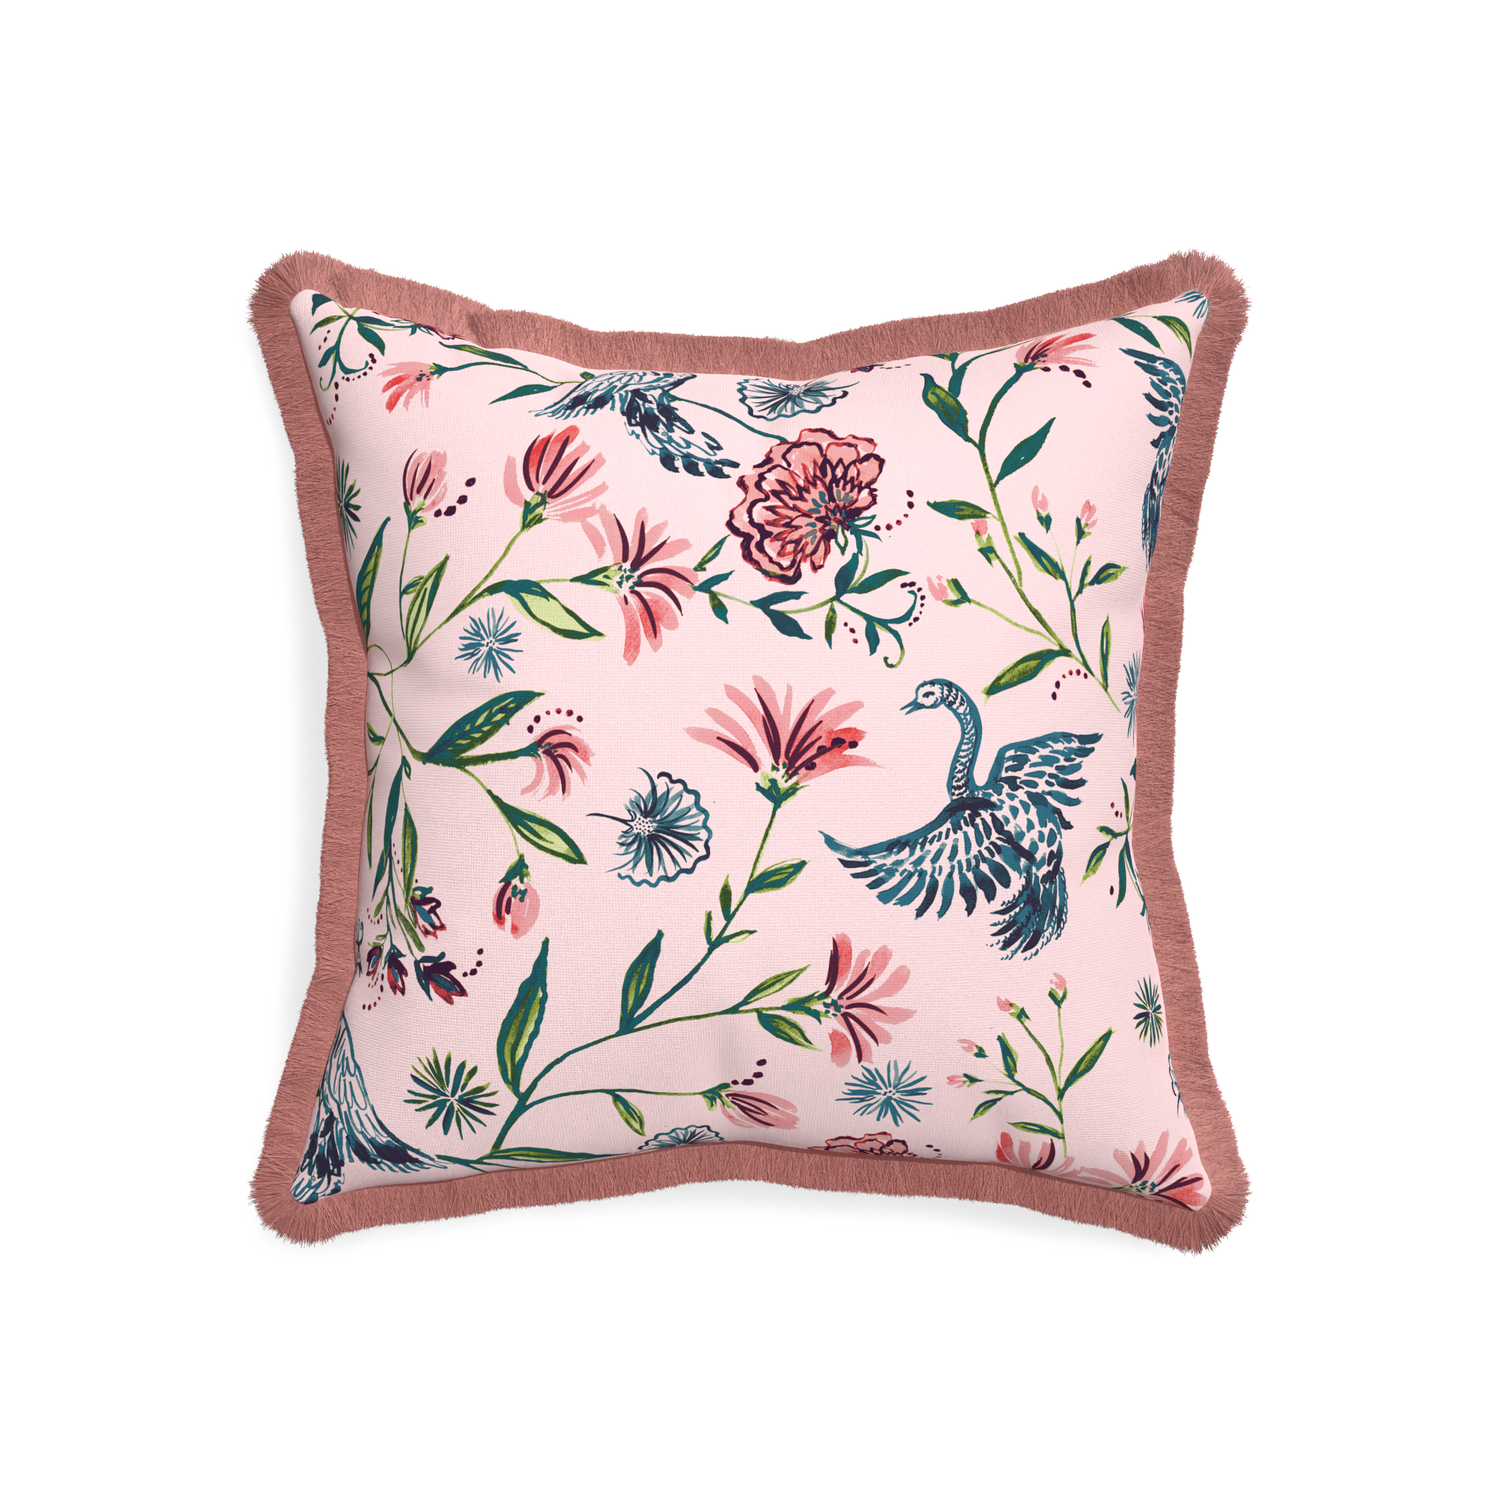 20-square daphne rose custom pillow with d fringe on white background